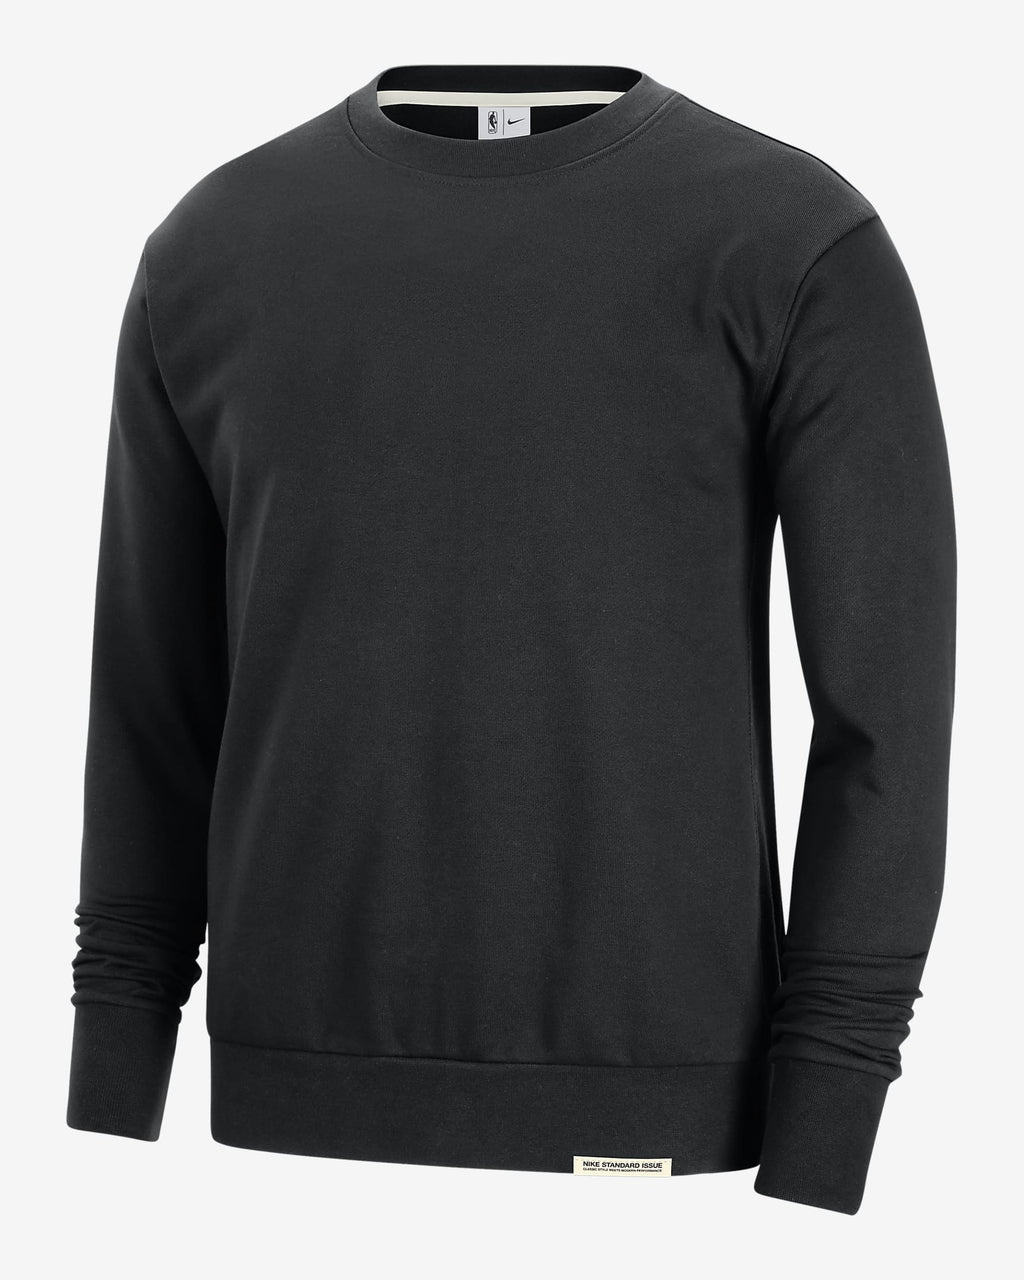 Team 31 Standard Issue Men's Nike Dri-FIT NBA Sweatshirt 'Black/Ivory'